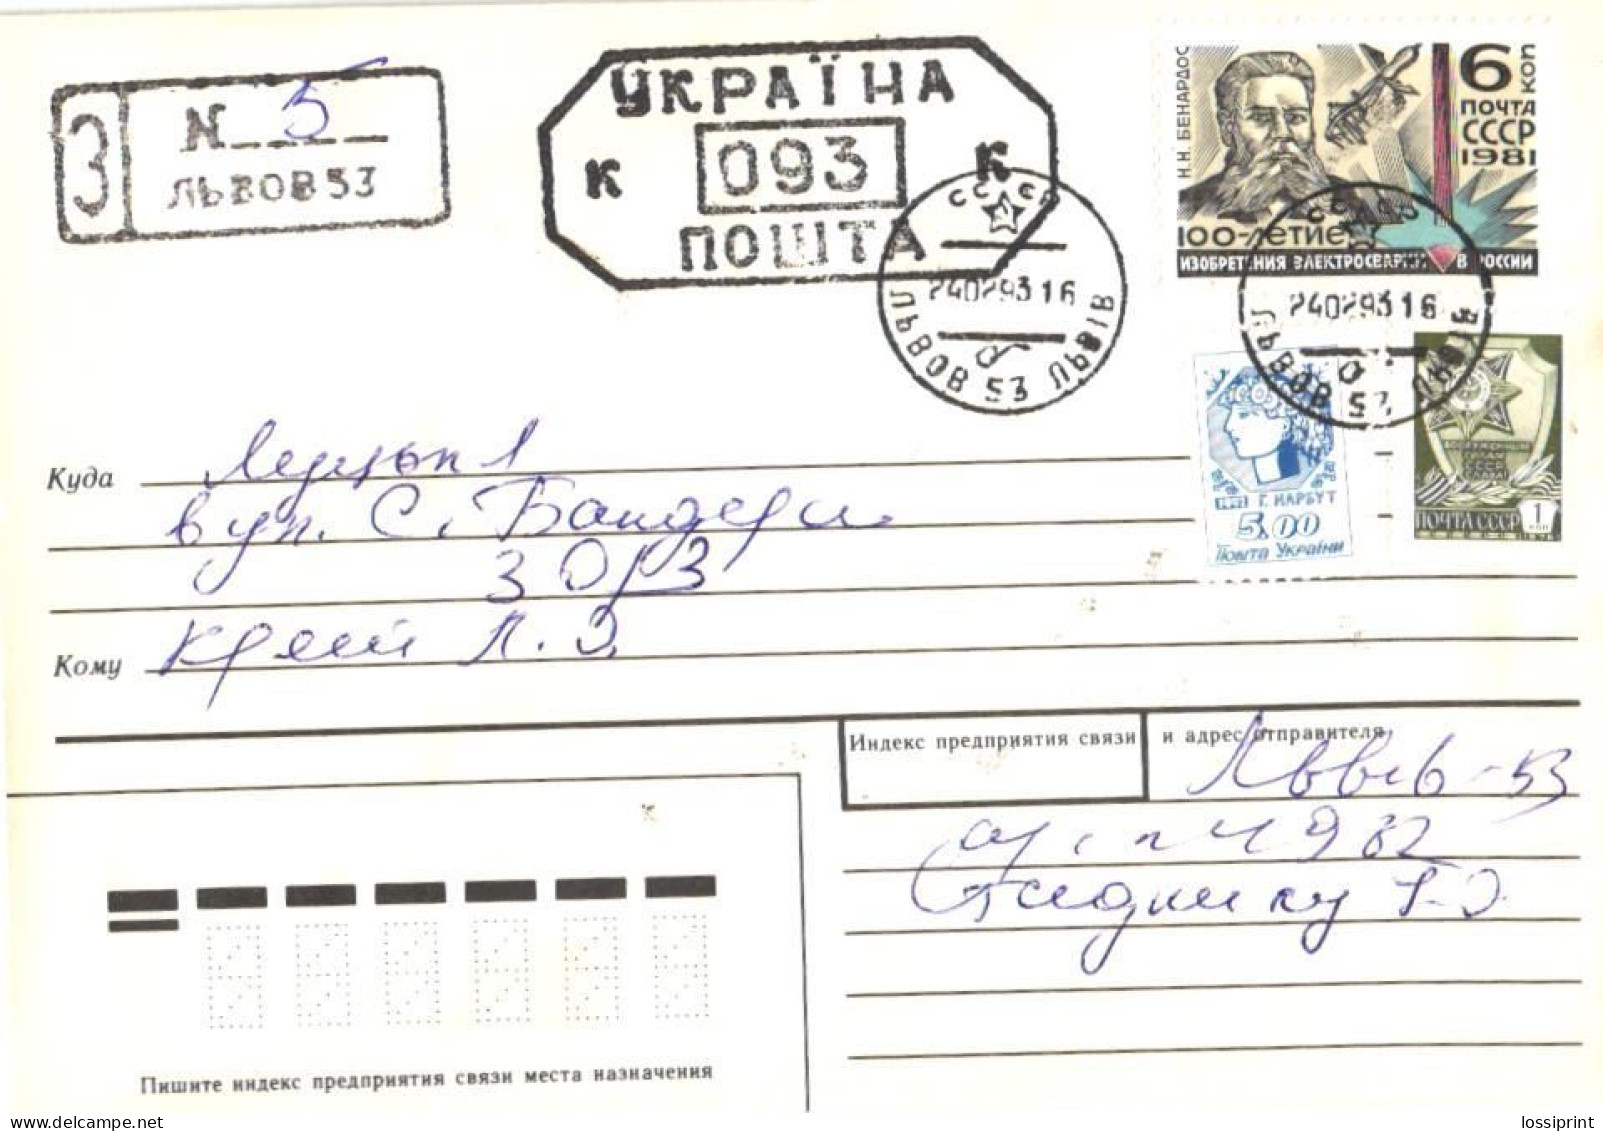 Ukraine:Ukraina:Registered Letter From Lvov53 With Soviet Union And Ukraine Stamps And Cancellation, 1993 - Ukraine